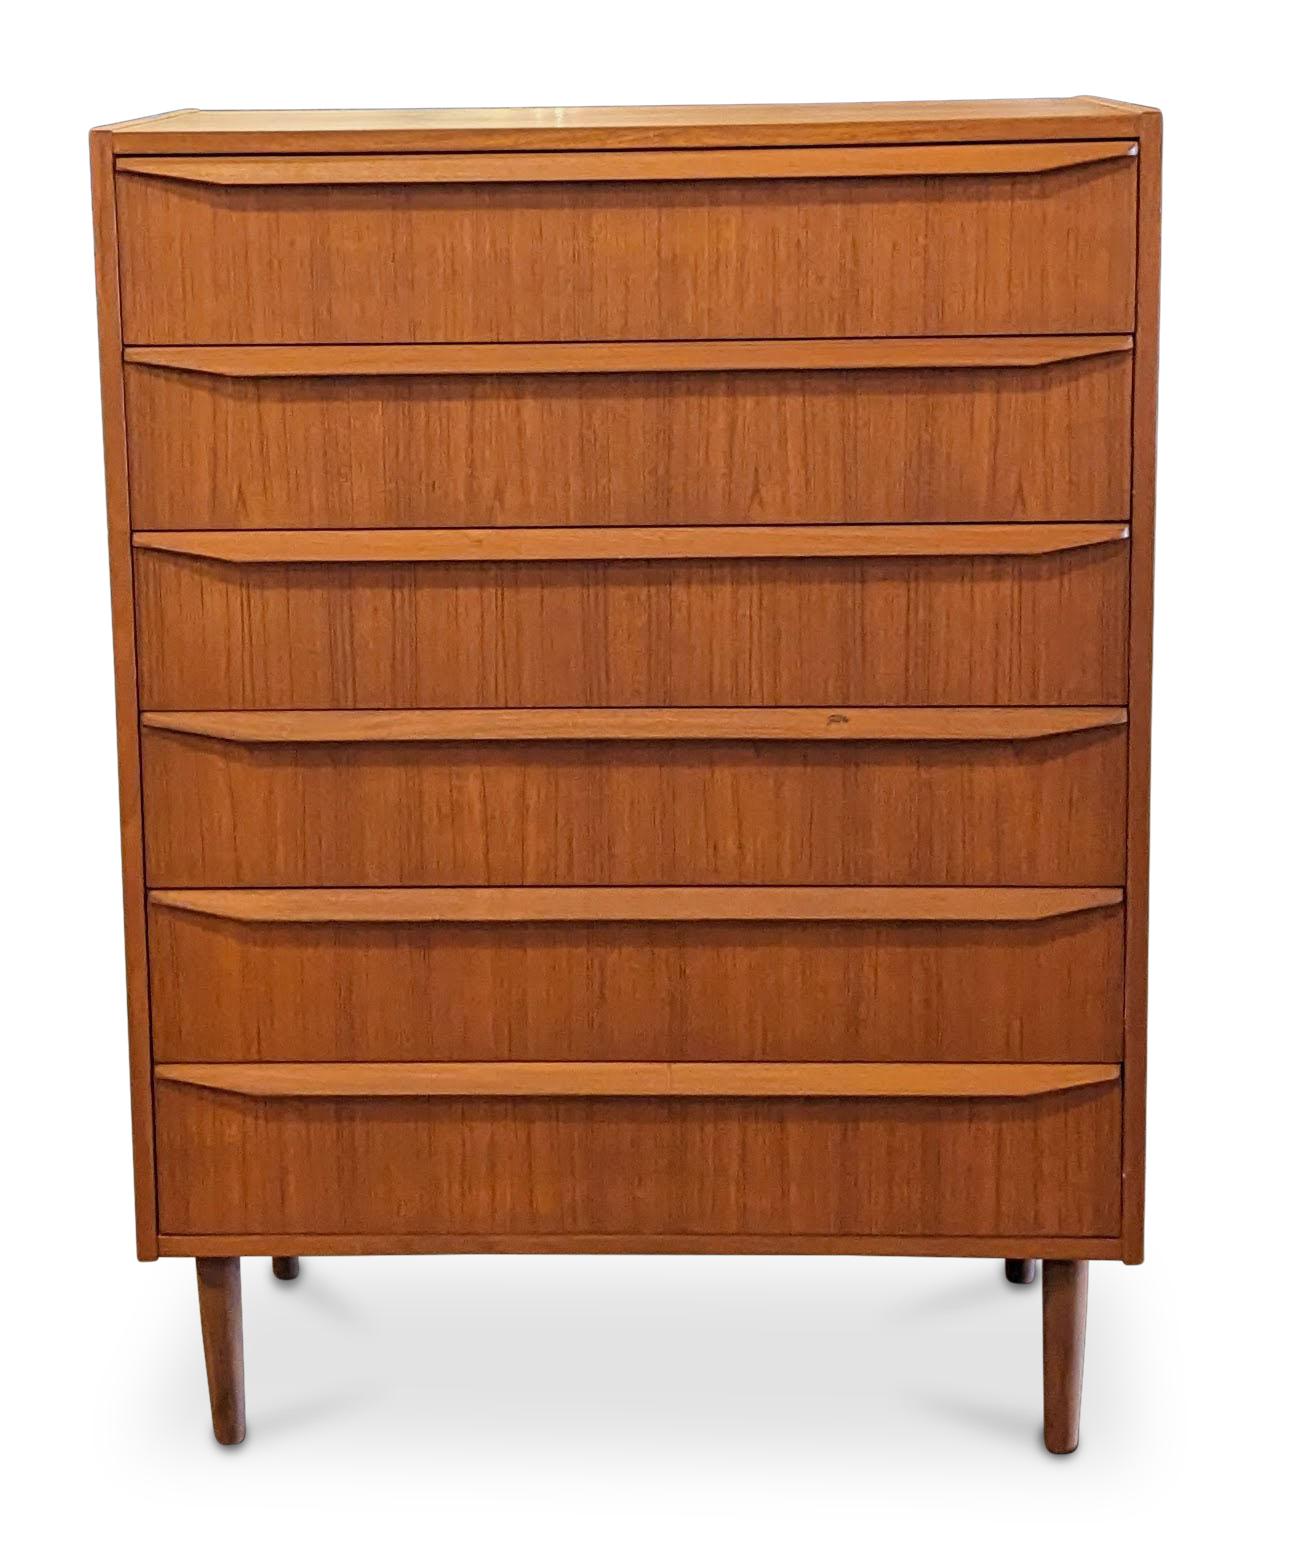 Mid-Century Modern Vintage Danish Mid Century Teak Dresser - 072326